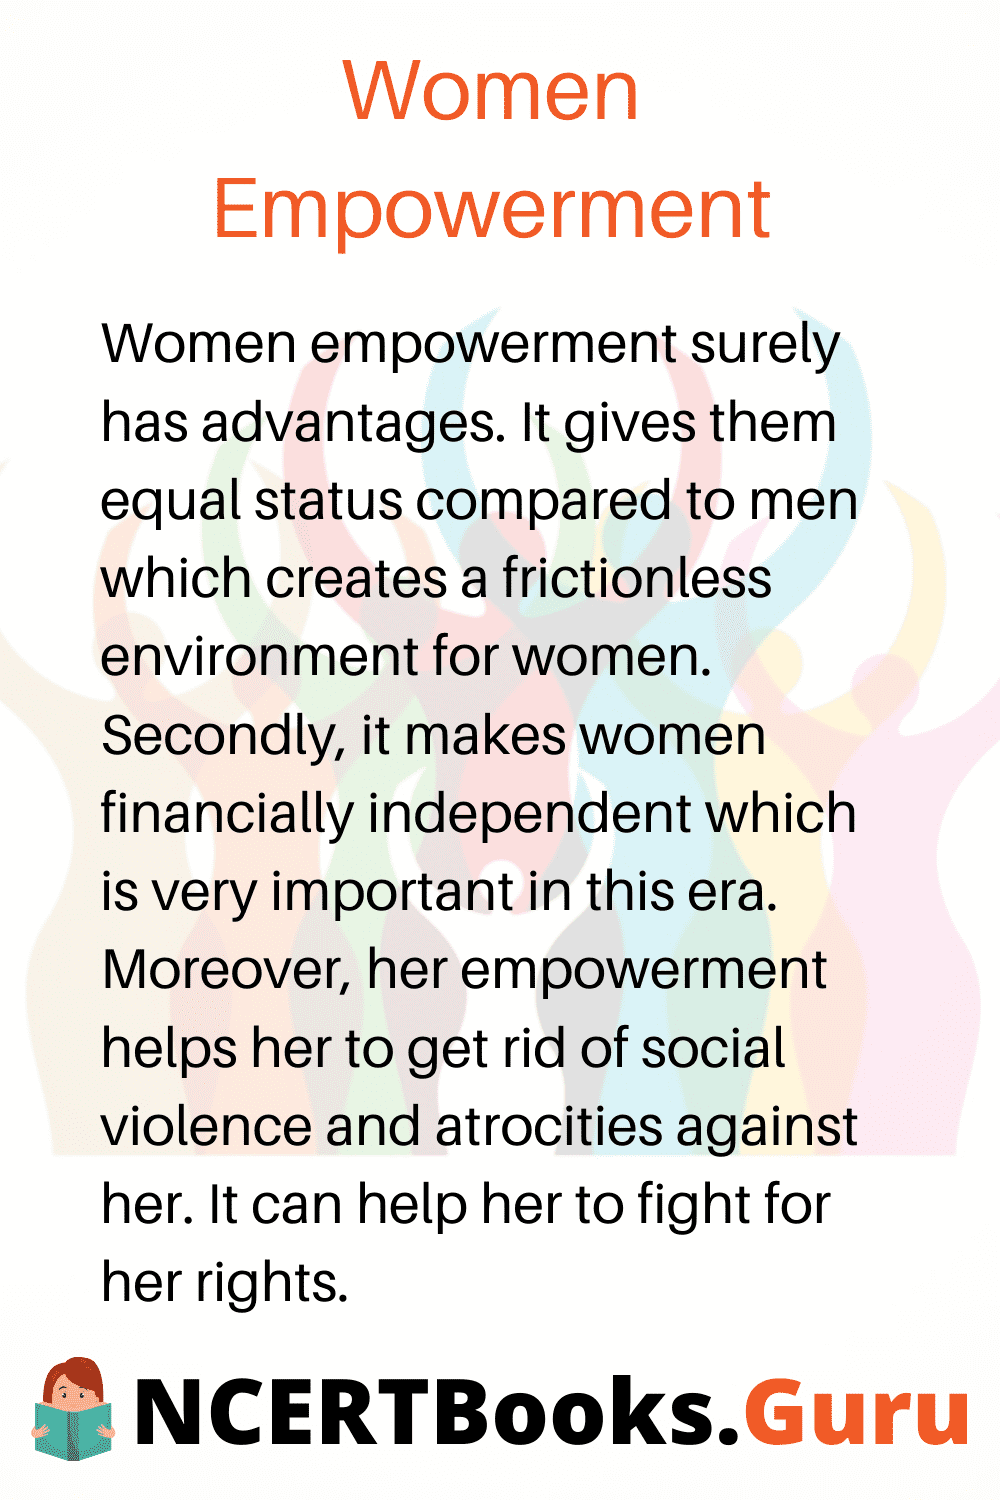 Essays on Women Empowerment